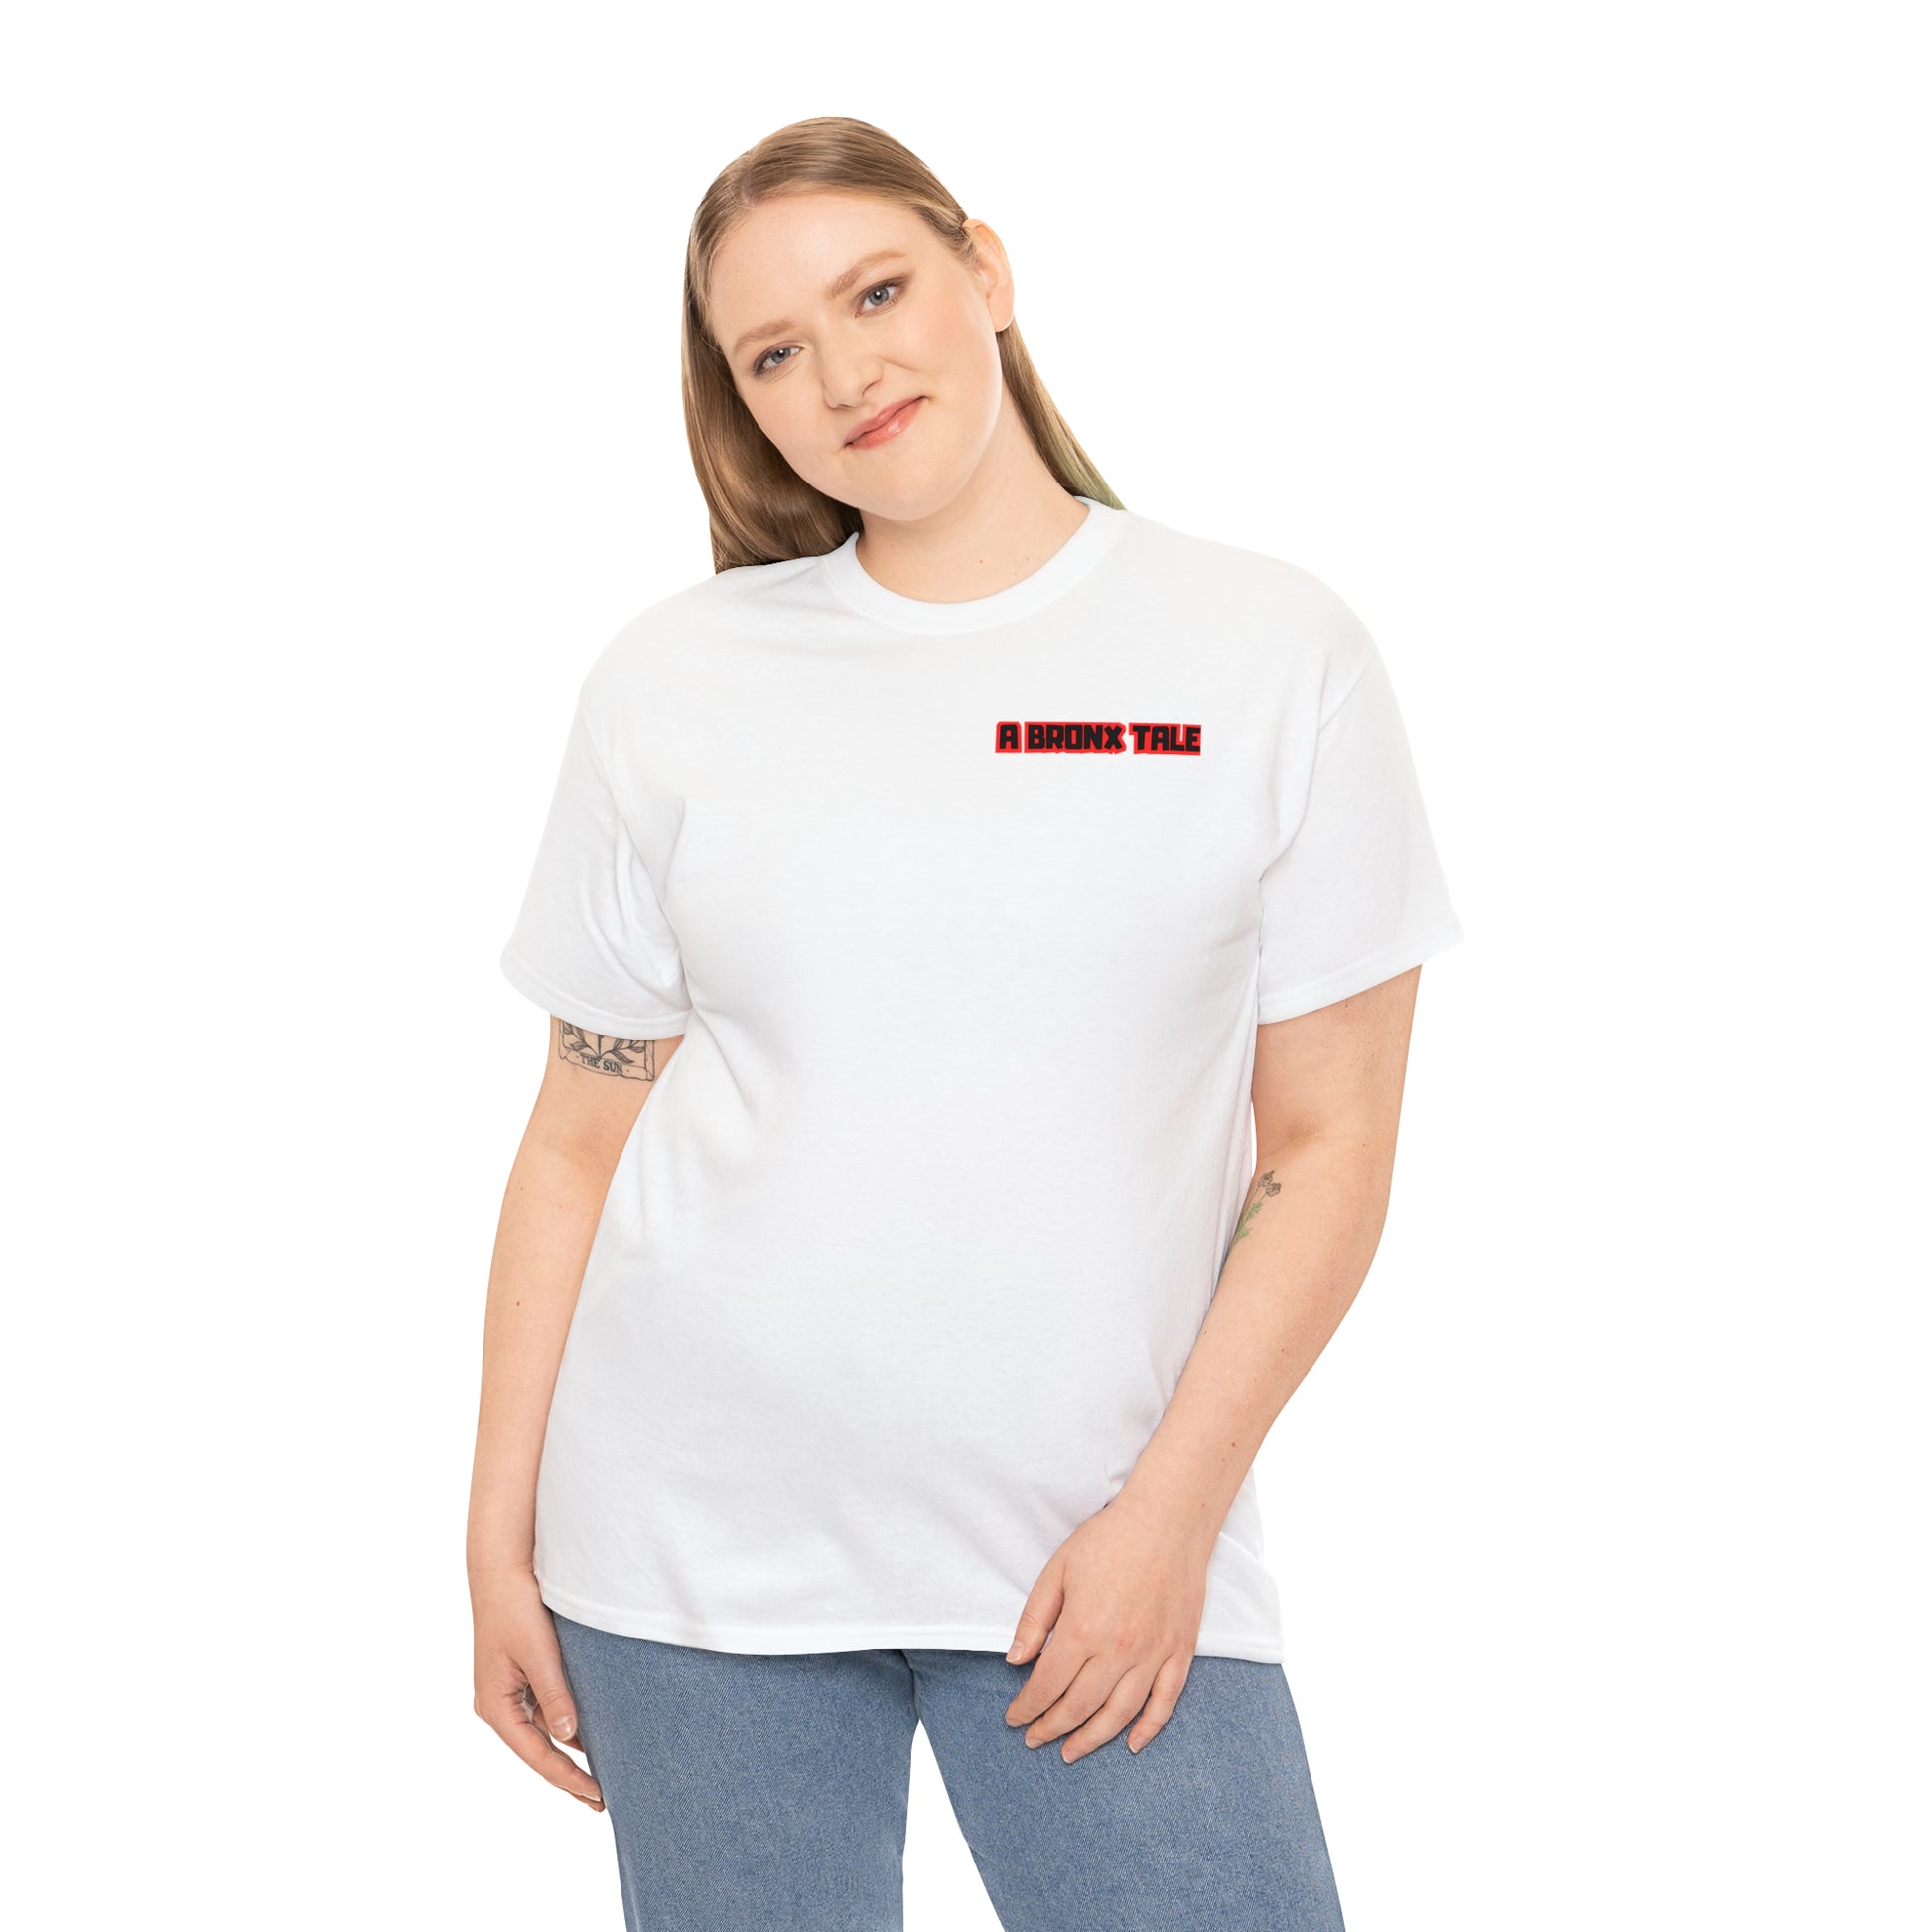 T-Shirt A BRONX TALE